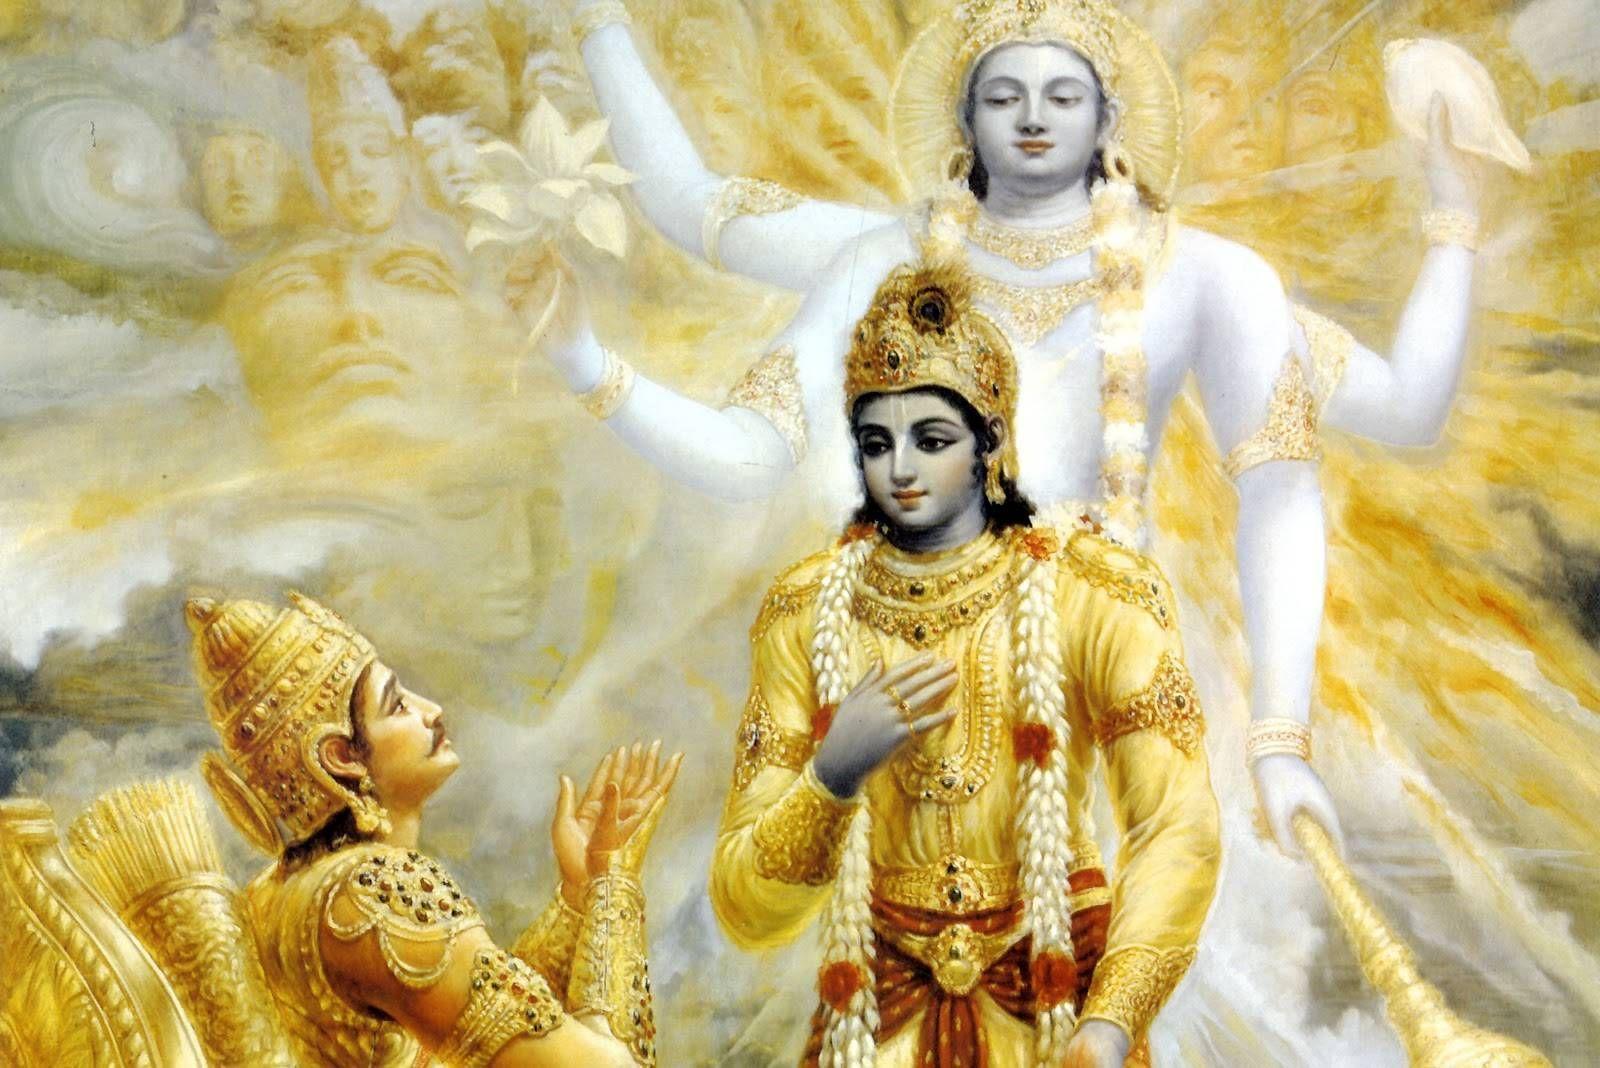 When Shri Krishna stepped ahead to keep up the word of Arjun